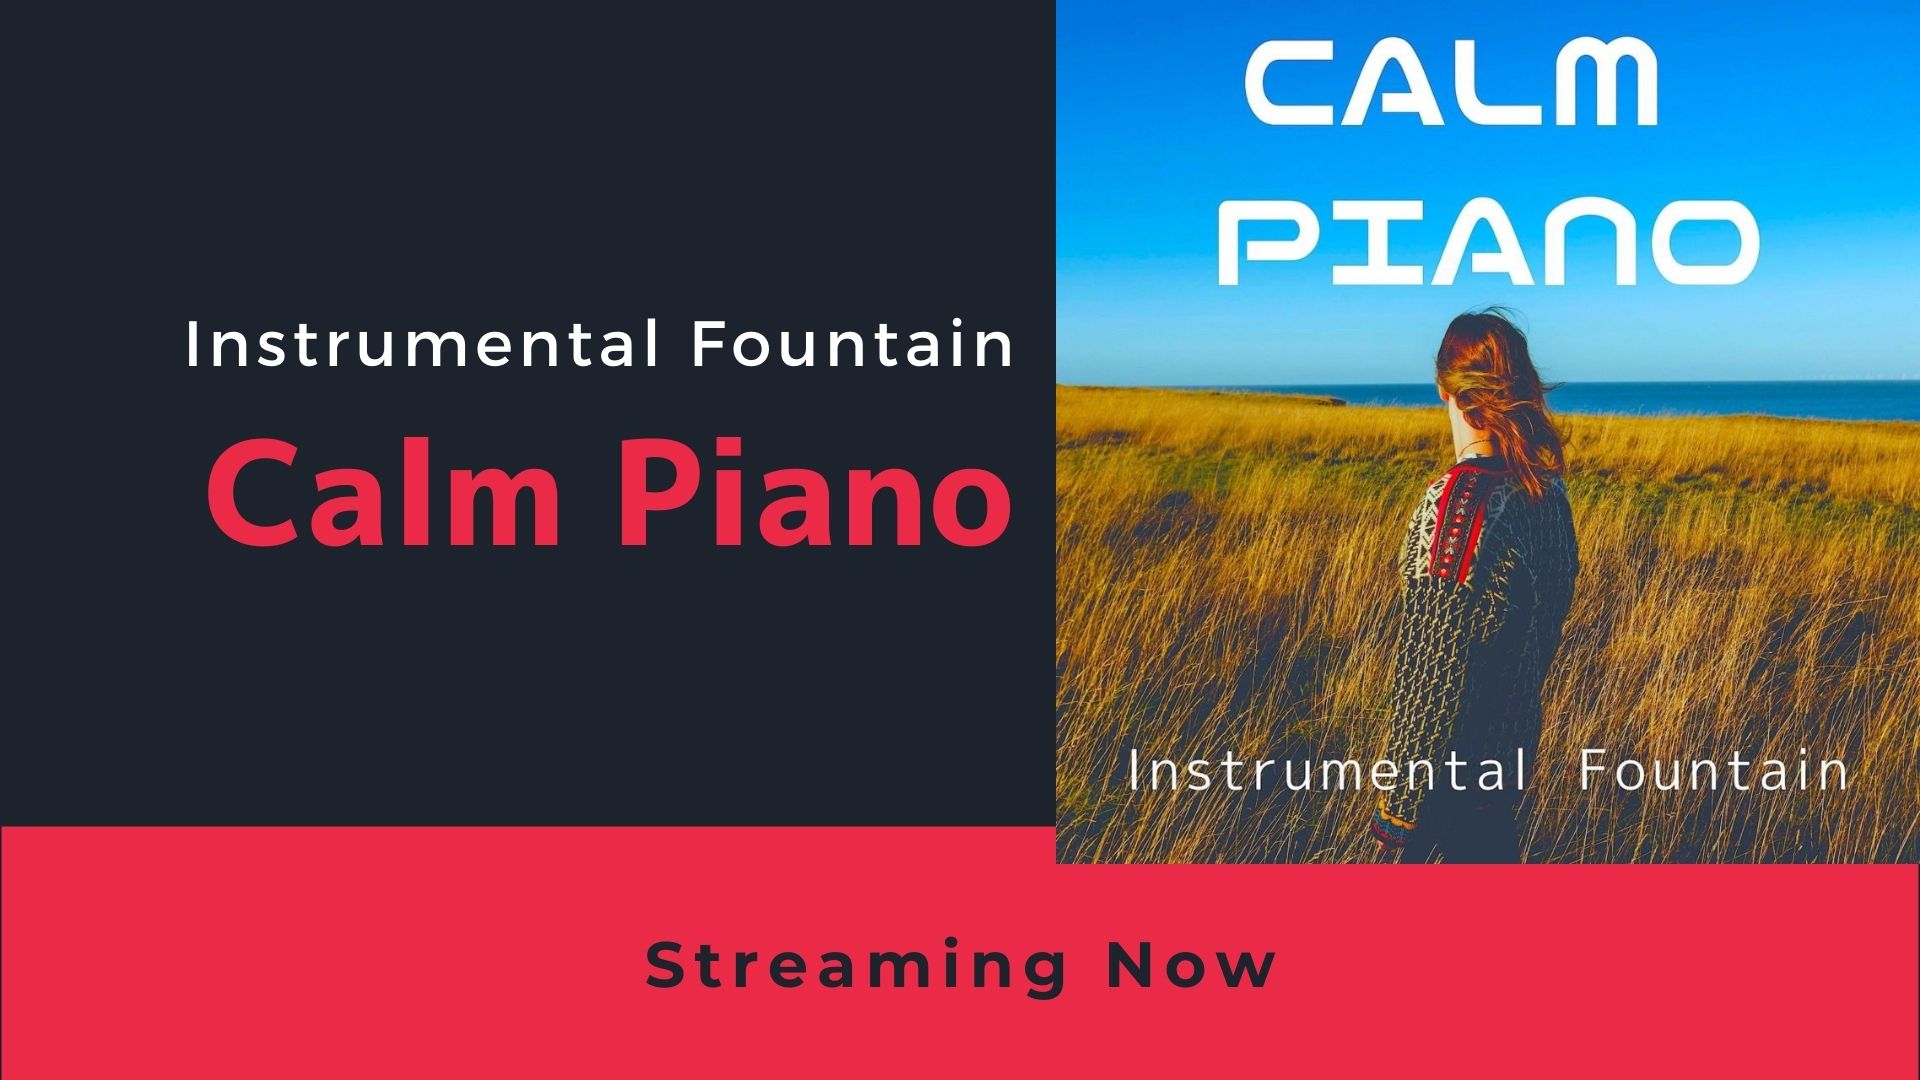 Calm Piano Instrumental Fountain